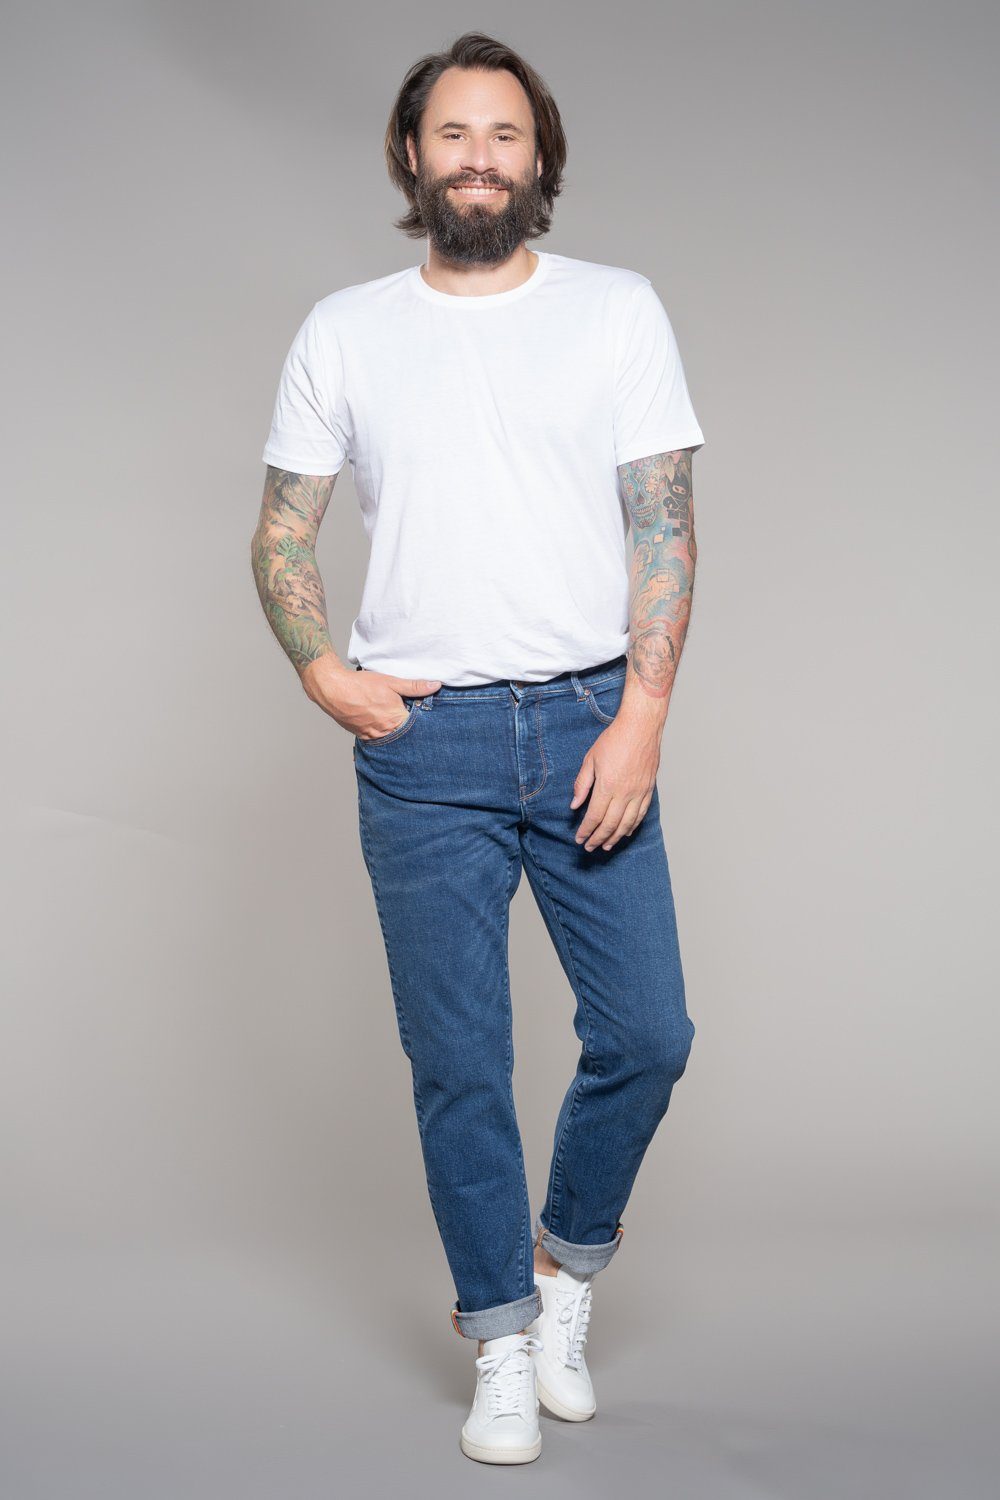 Slim Fashion Waist, Feuervogl Unisex, Fit, Medium Blue Unisex fv-West:minster, Fit, Slim-fit-Jeans 5-Pocket-Style, Waist Medium Slim